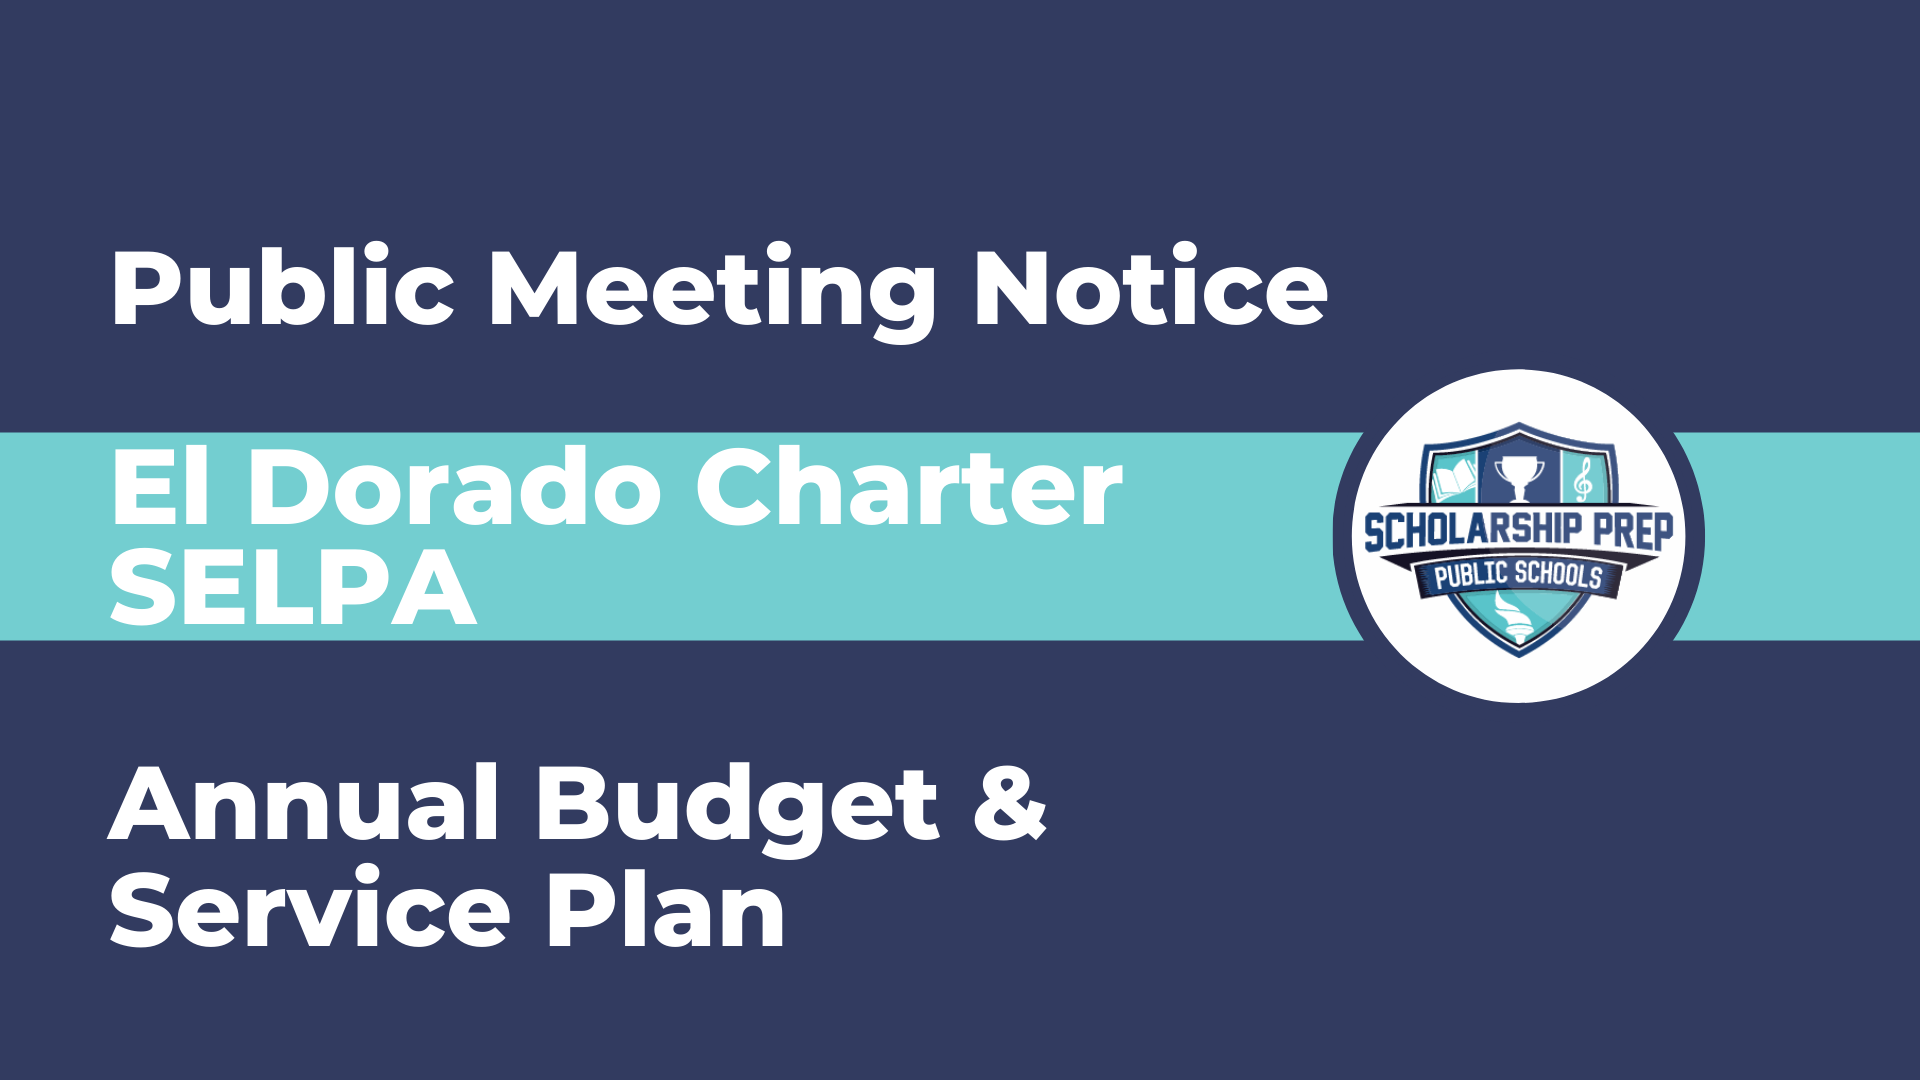 El Dorado Charter SELPA Annual Budget & Service Plan